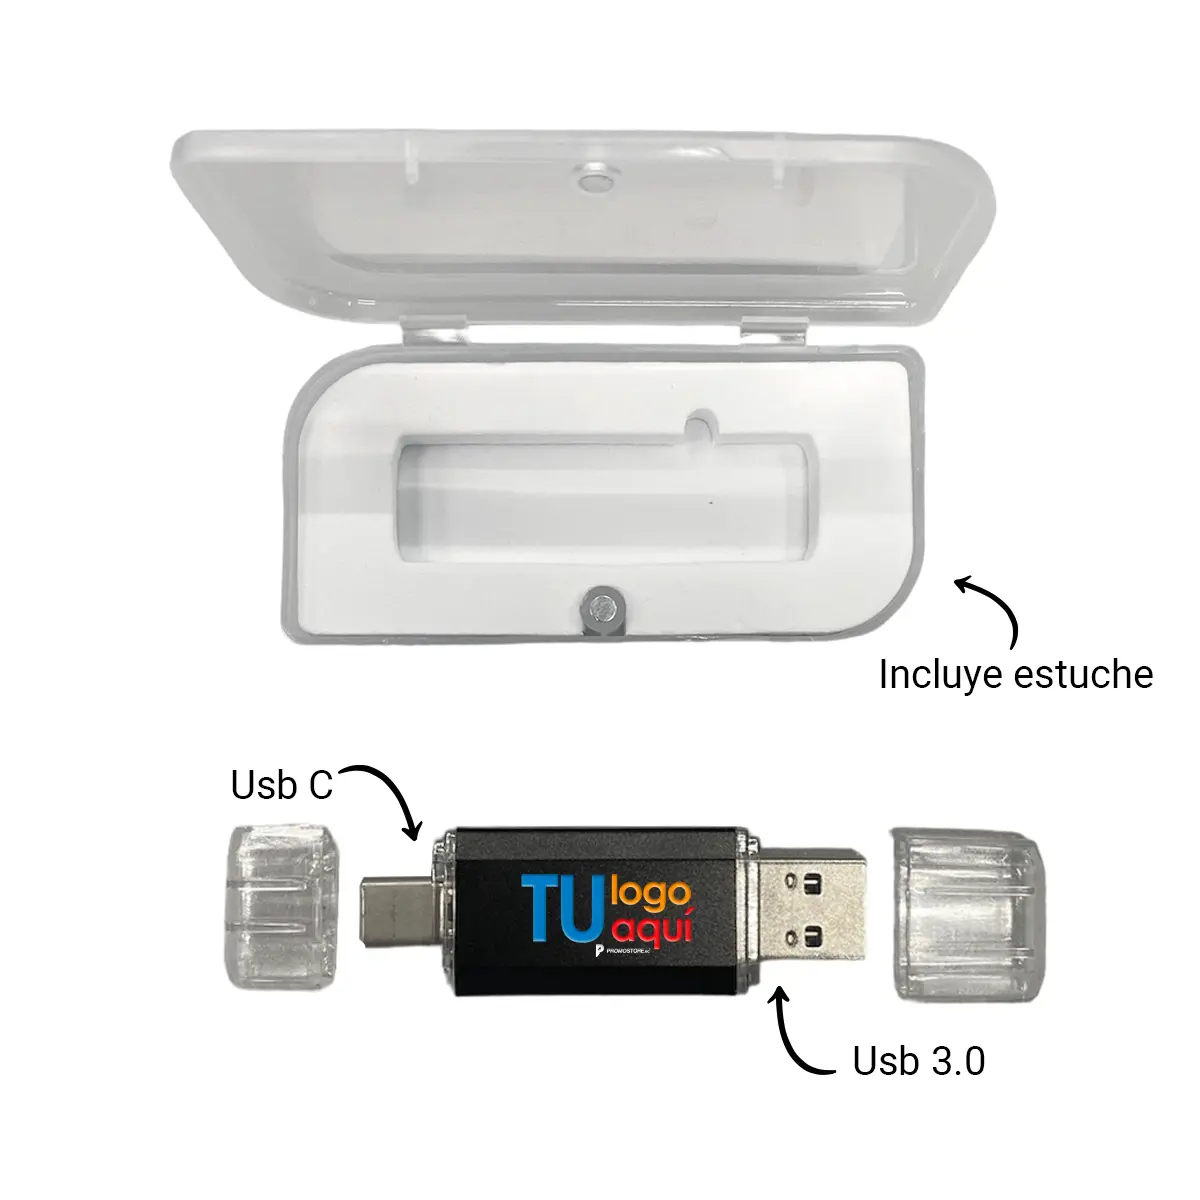 TE076-Pendrive-duo-USB-USB-C-detalles